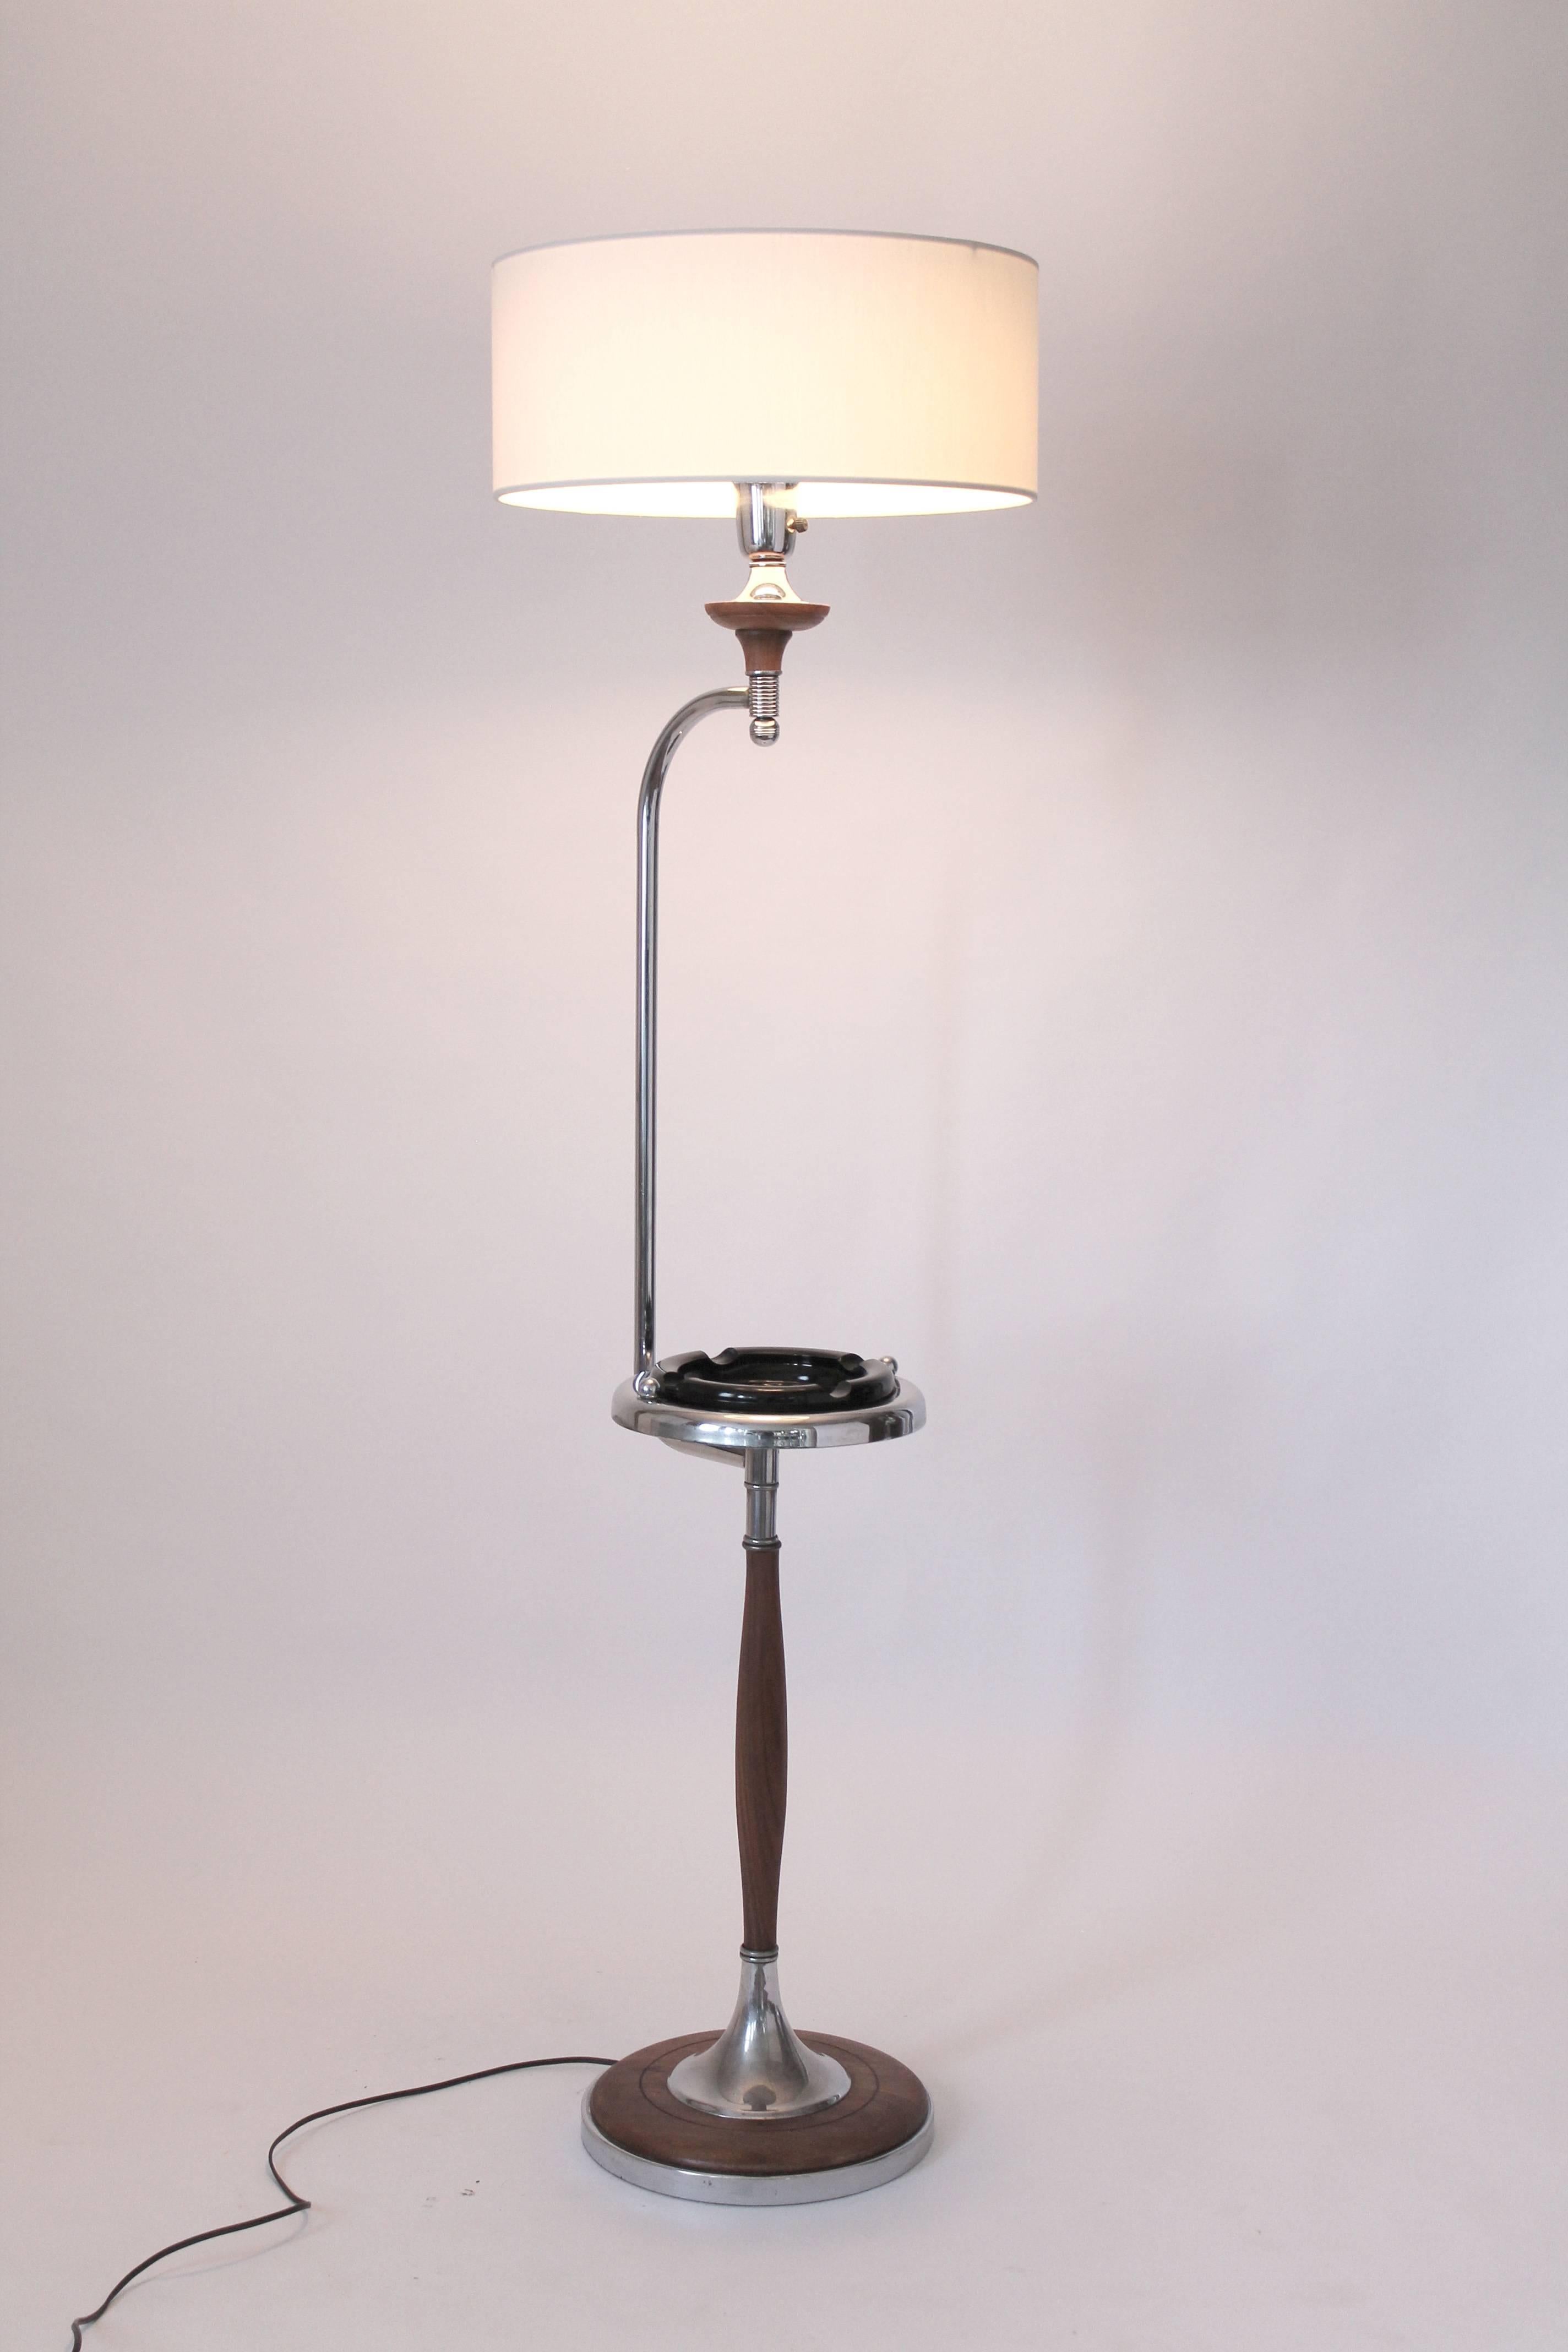 vintage ashtray lamp